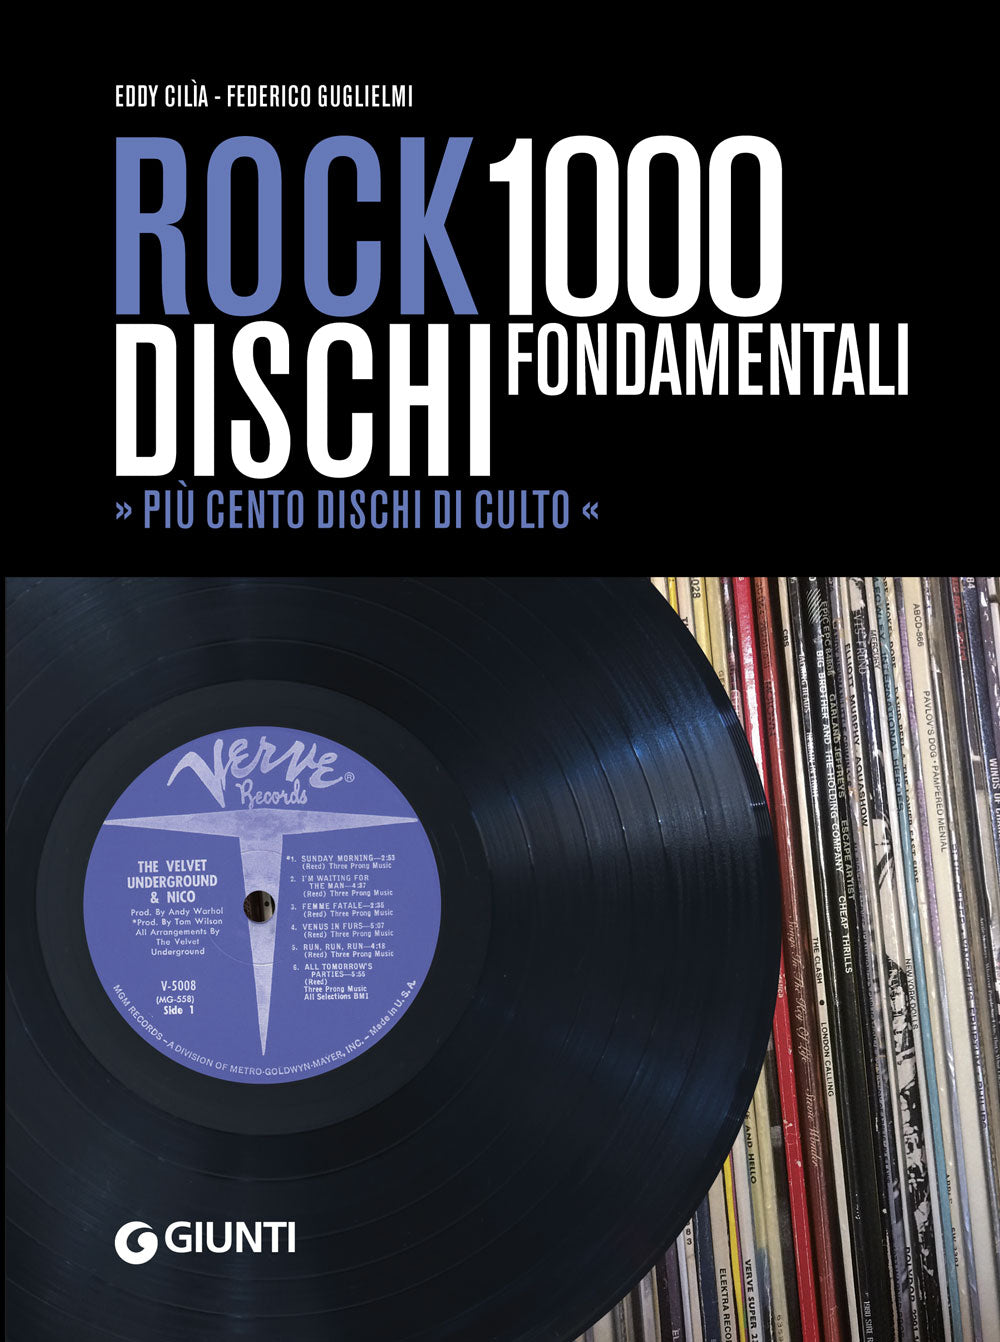 Rock: 1000 dischi fondamentali